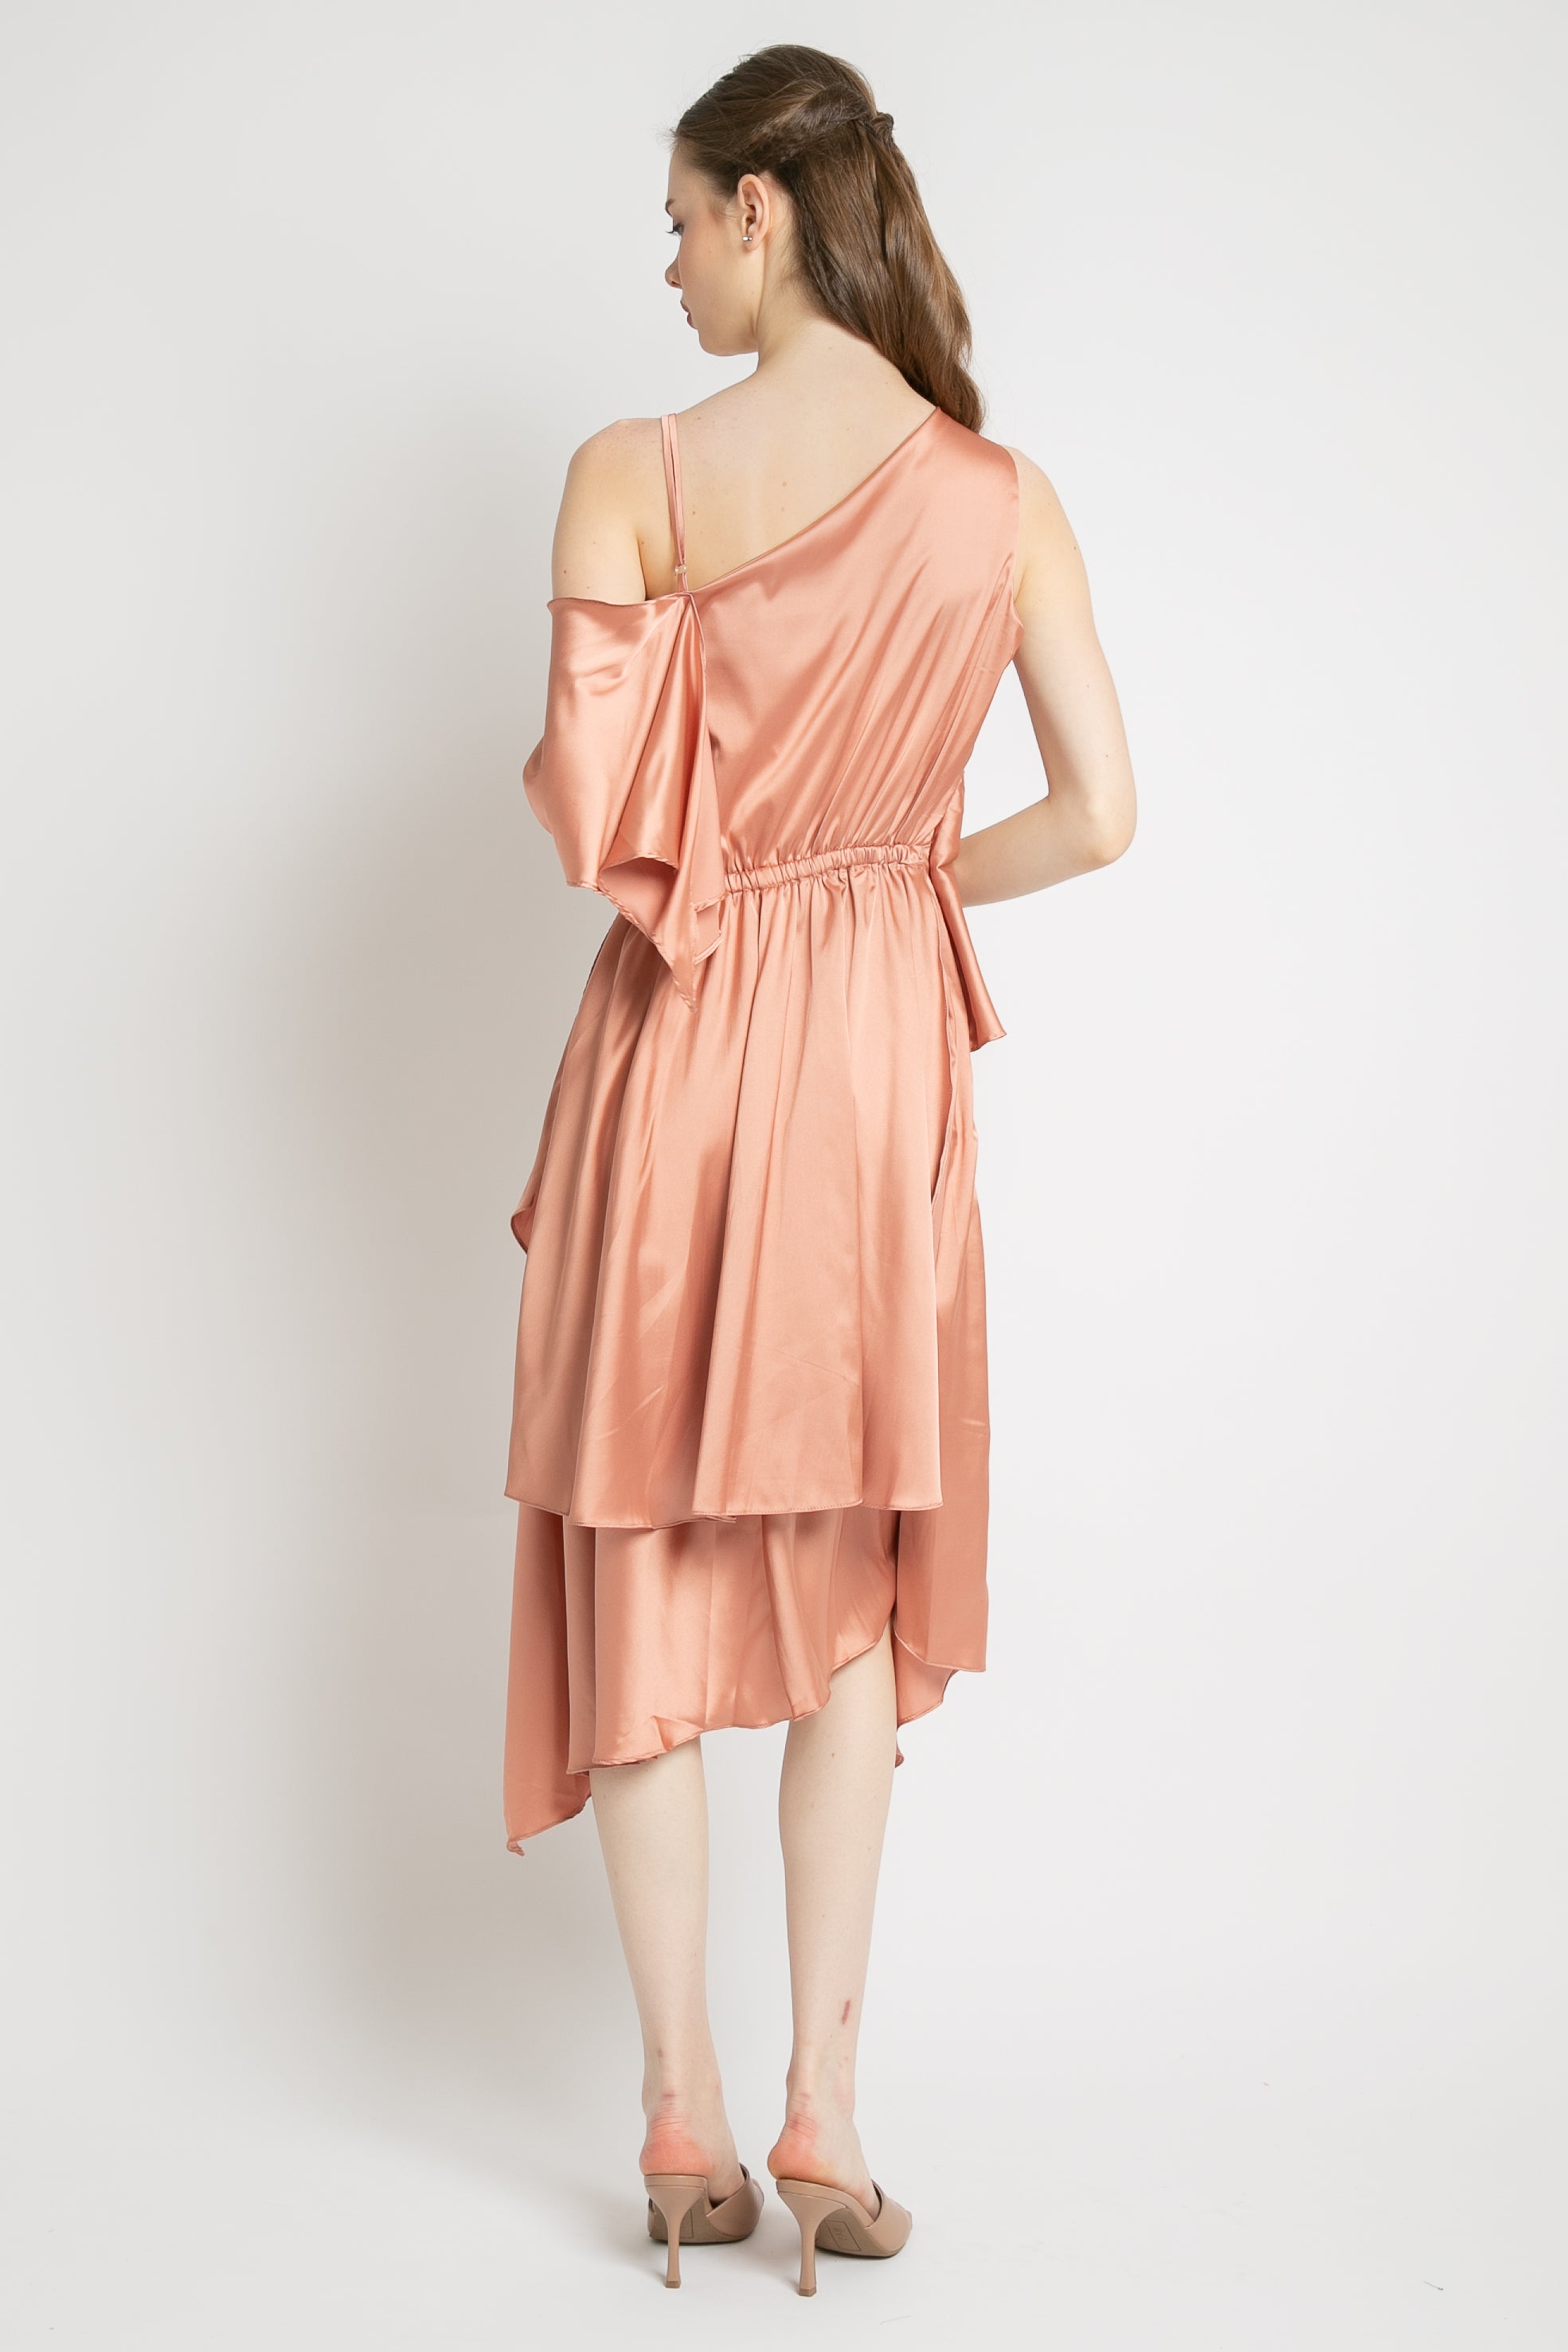 Louisella Dress in Peach